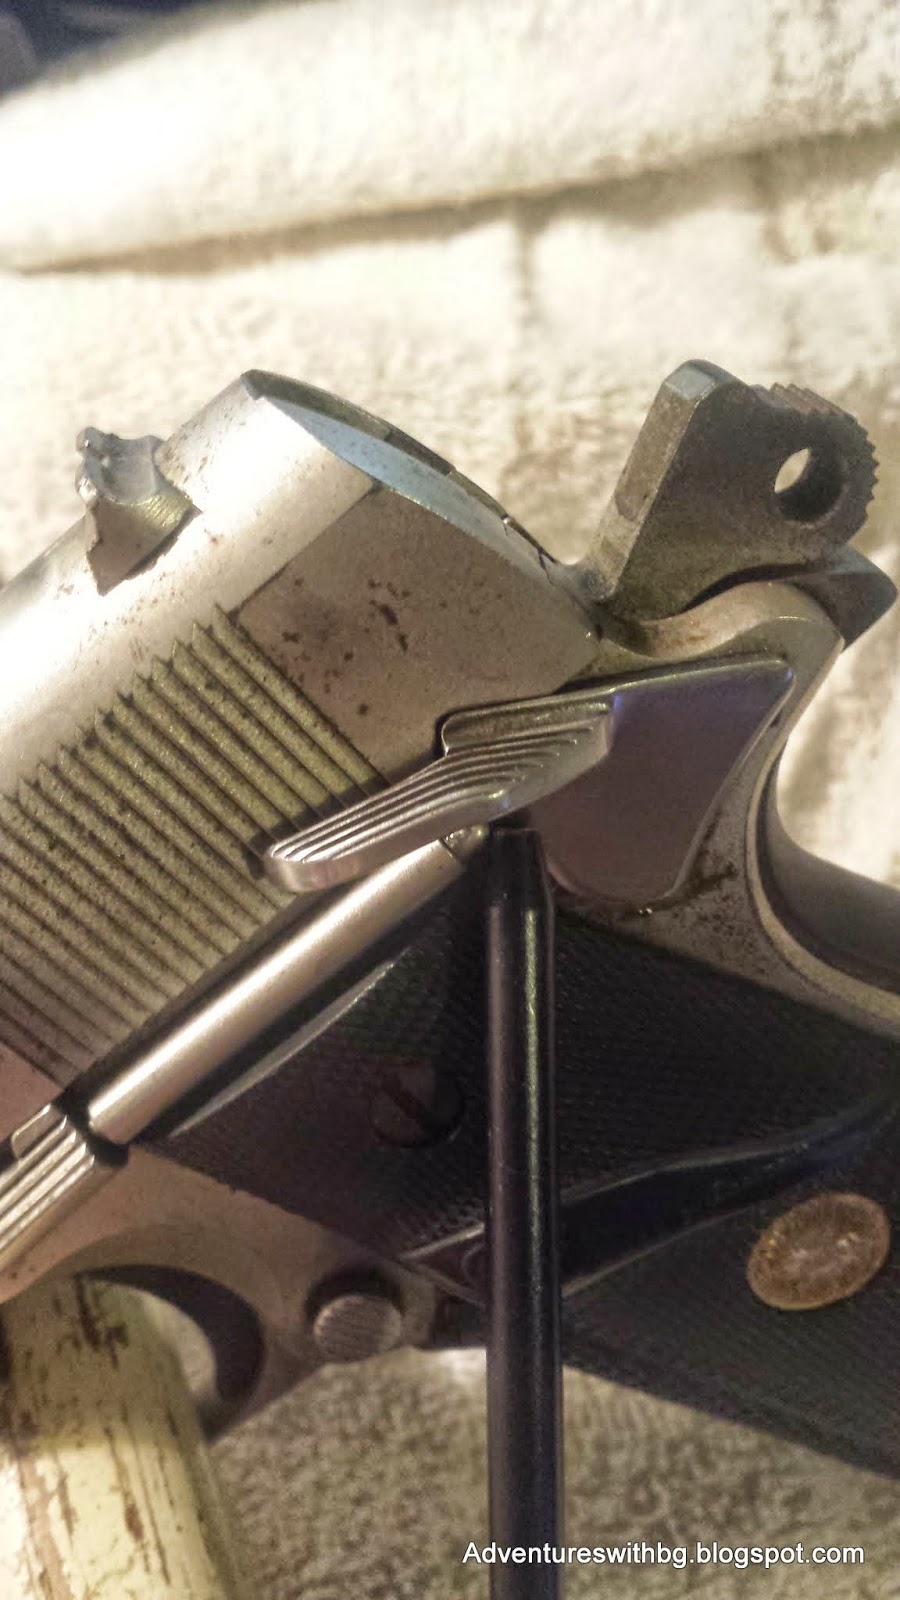 The mechanical safety on a pistol